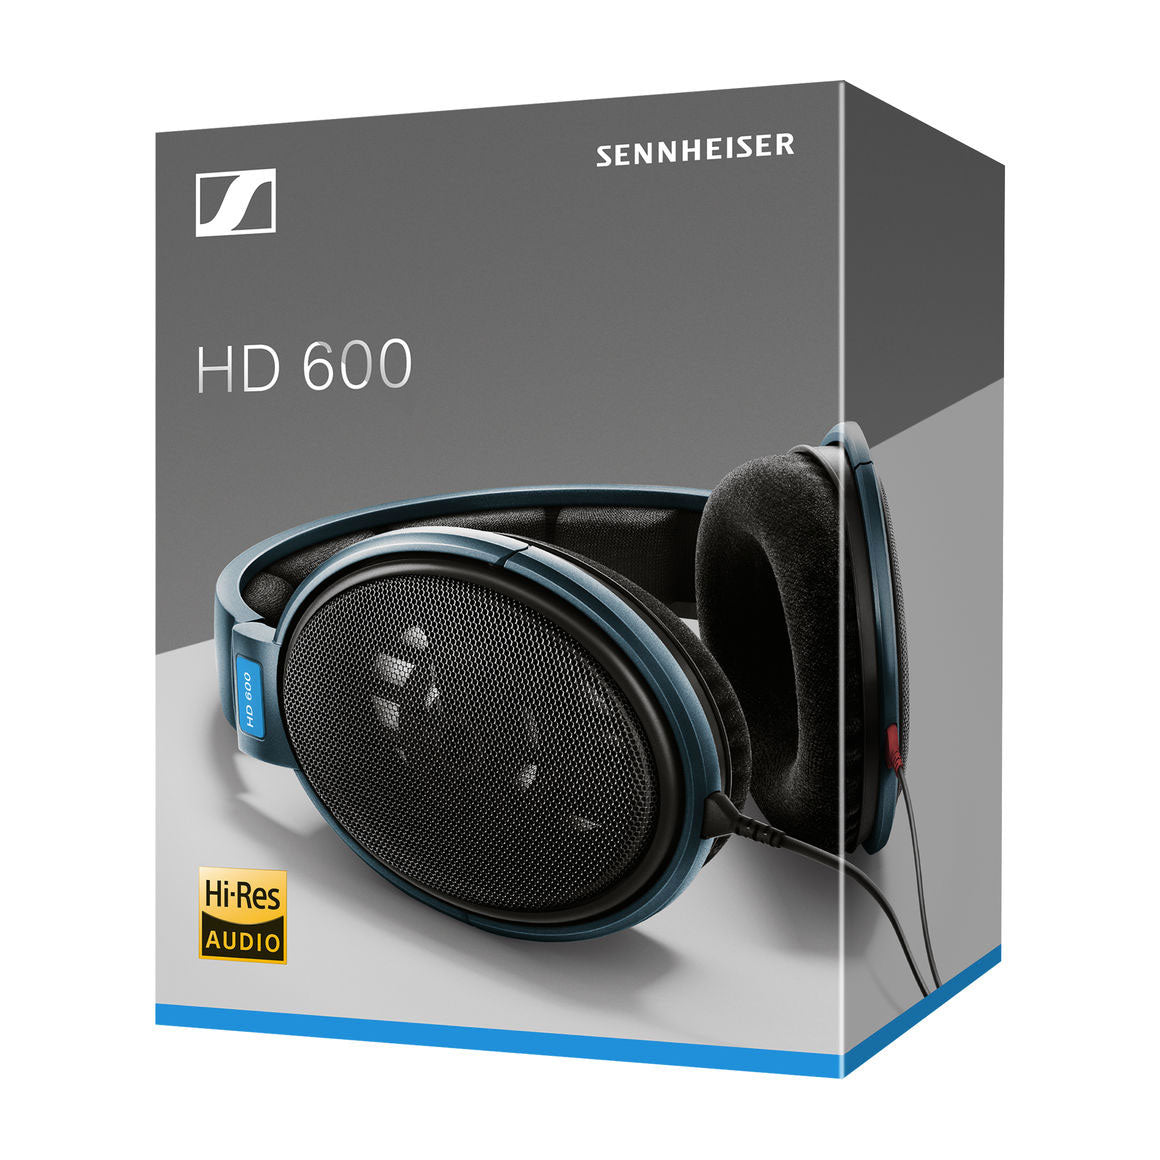 HD 600 – Sennheiser